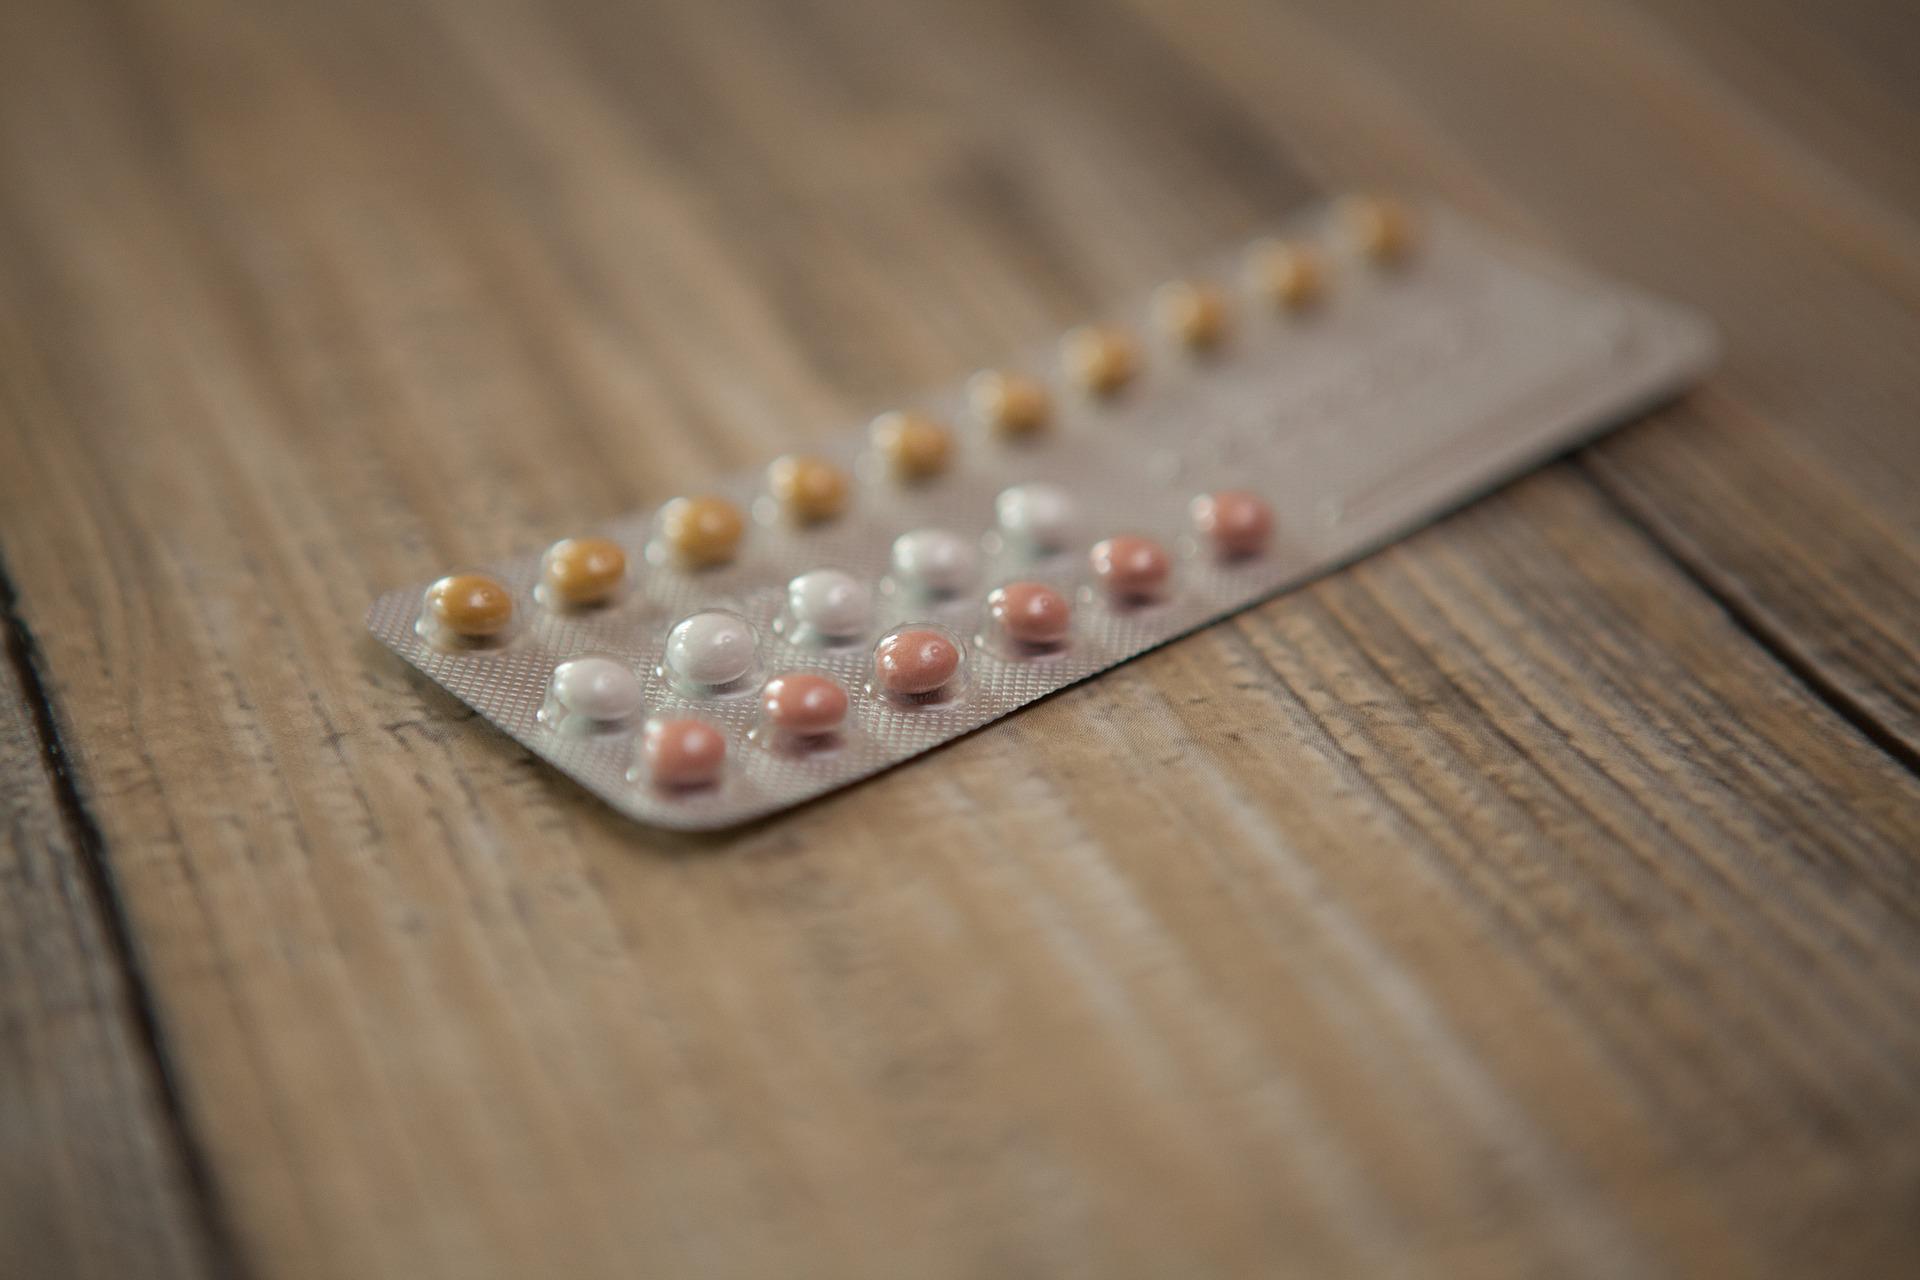 Some specialists may prescribe birth control pills to regulate patients' menstrual flow (Source: Pixabay/GabiSanda)